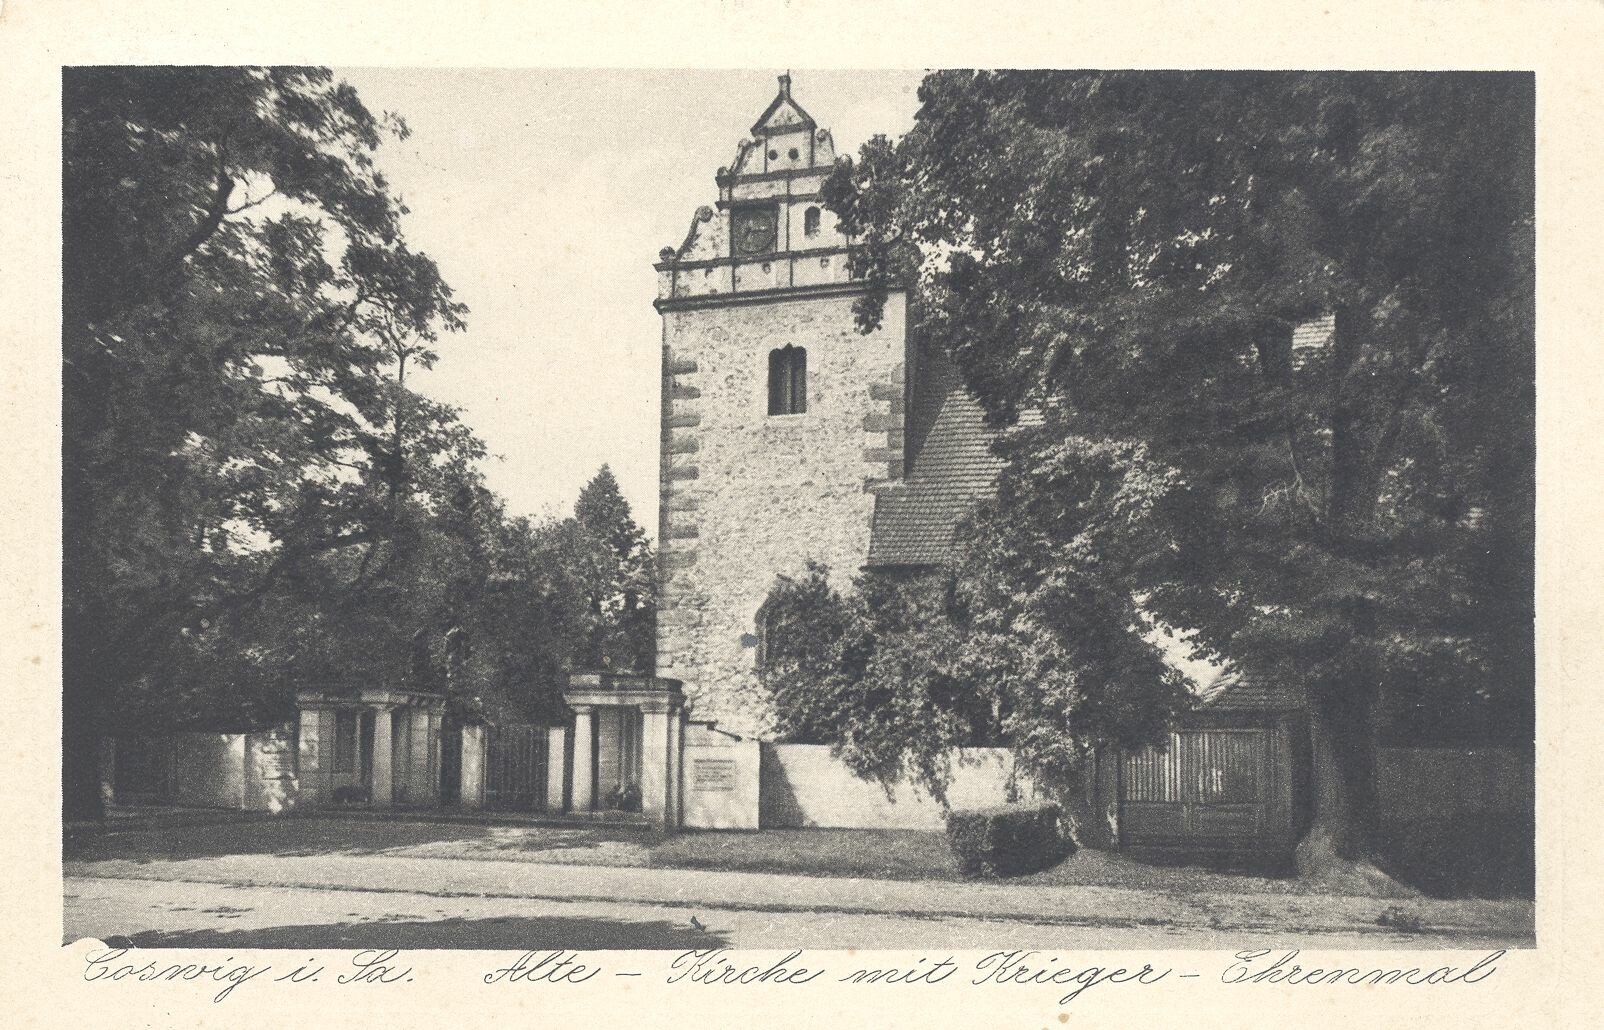 Postkarte: Coswig - Alte Kirche (Karrasburg Museum Coswig CC BY-NC-SA)